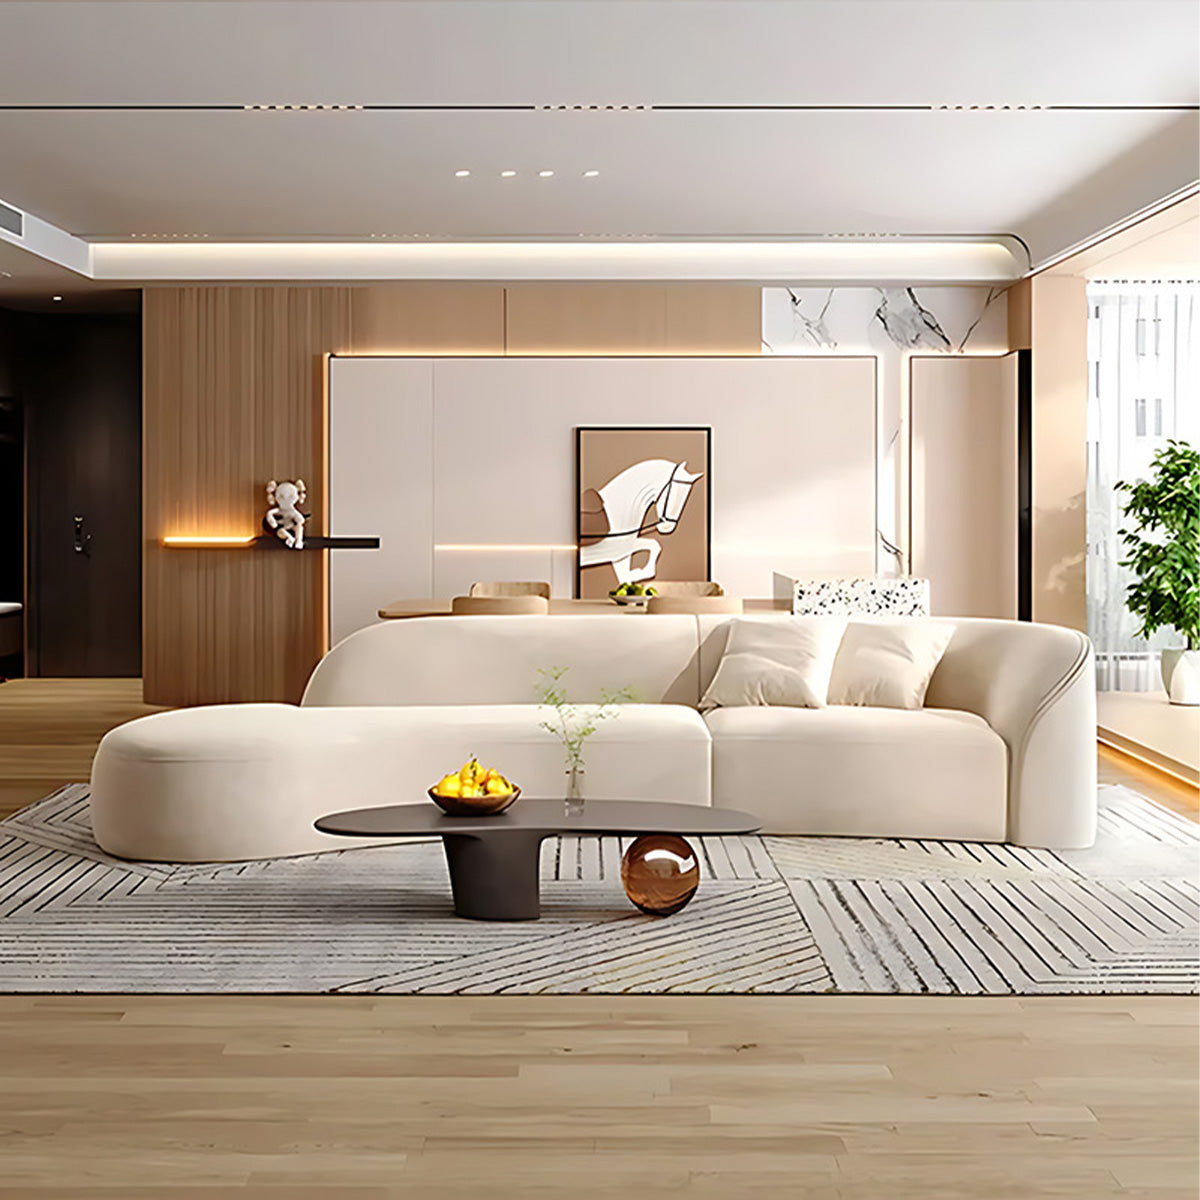 Minimalist Cream Fabric Sofa: Ideal for Small Living Spaces(West Coast)